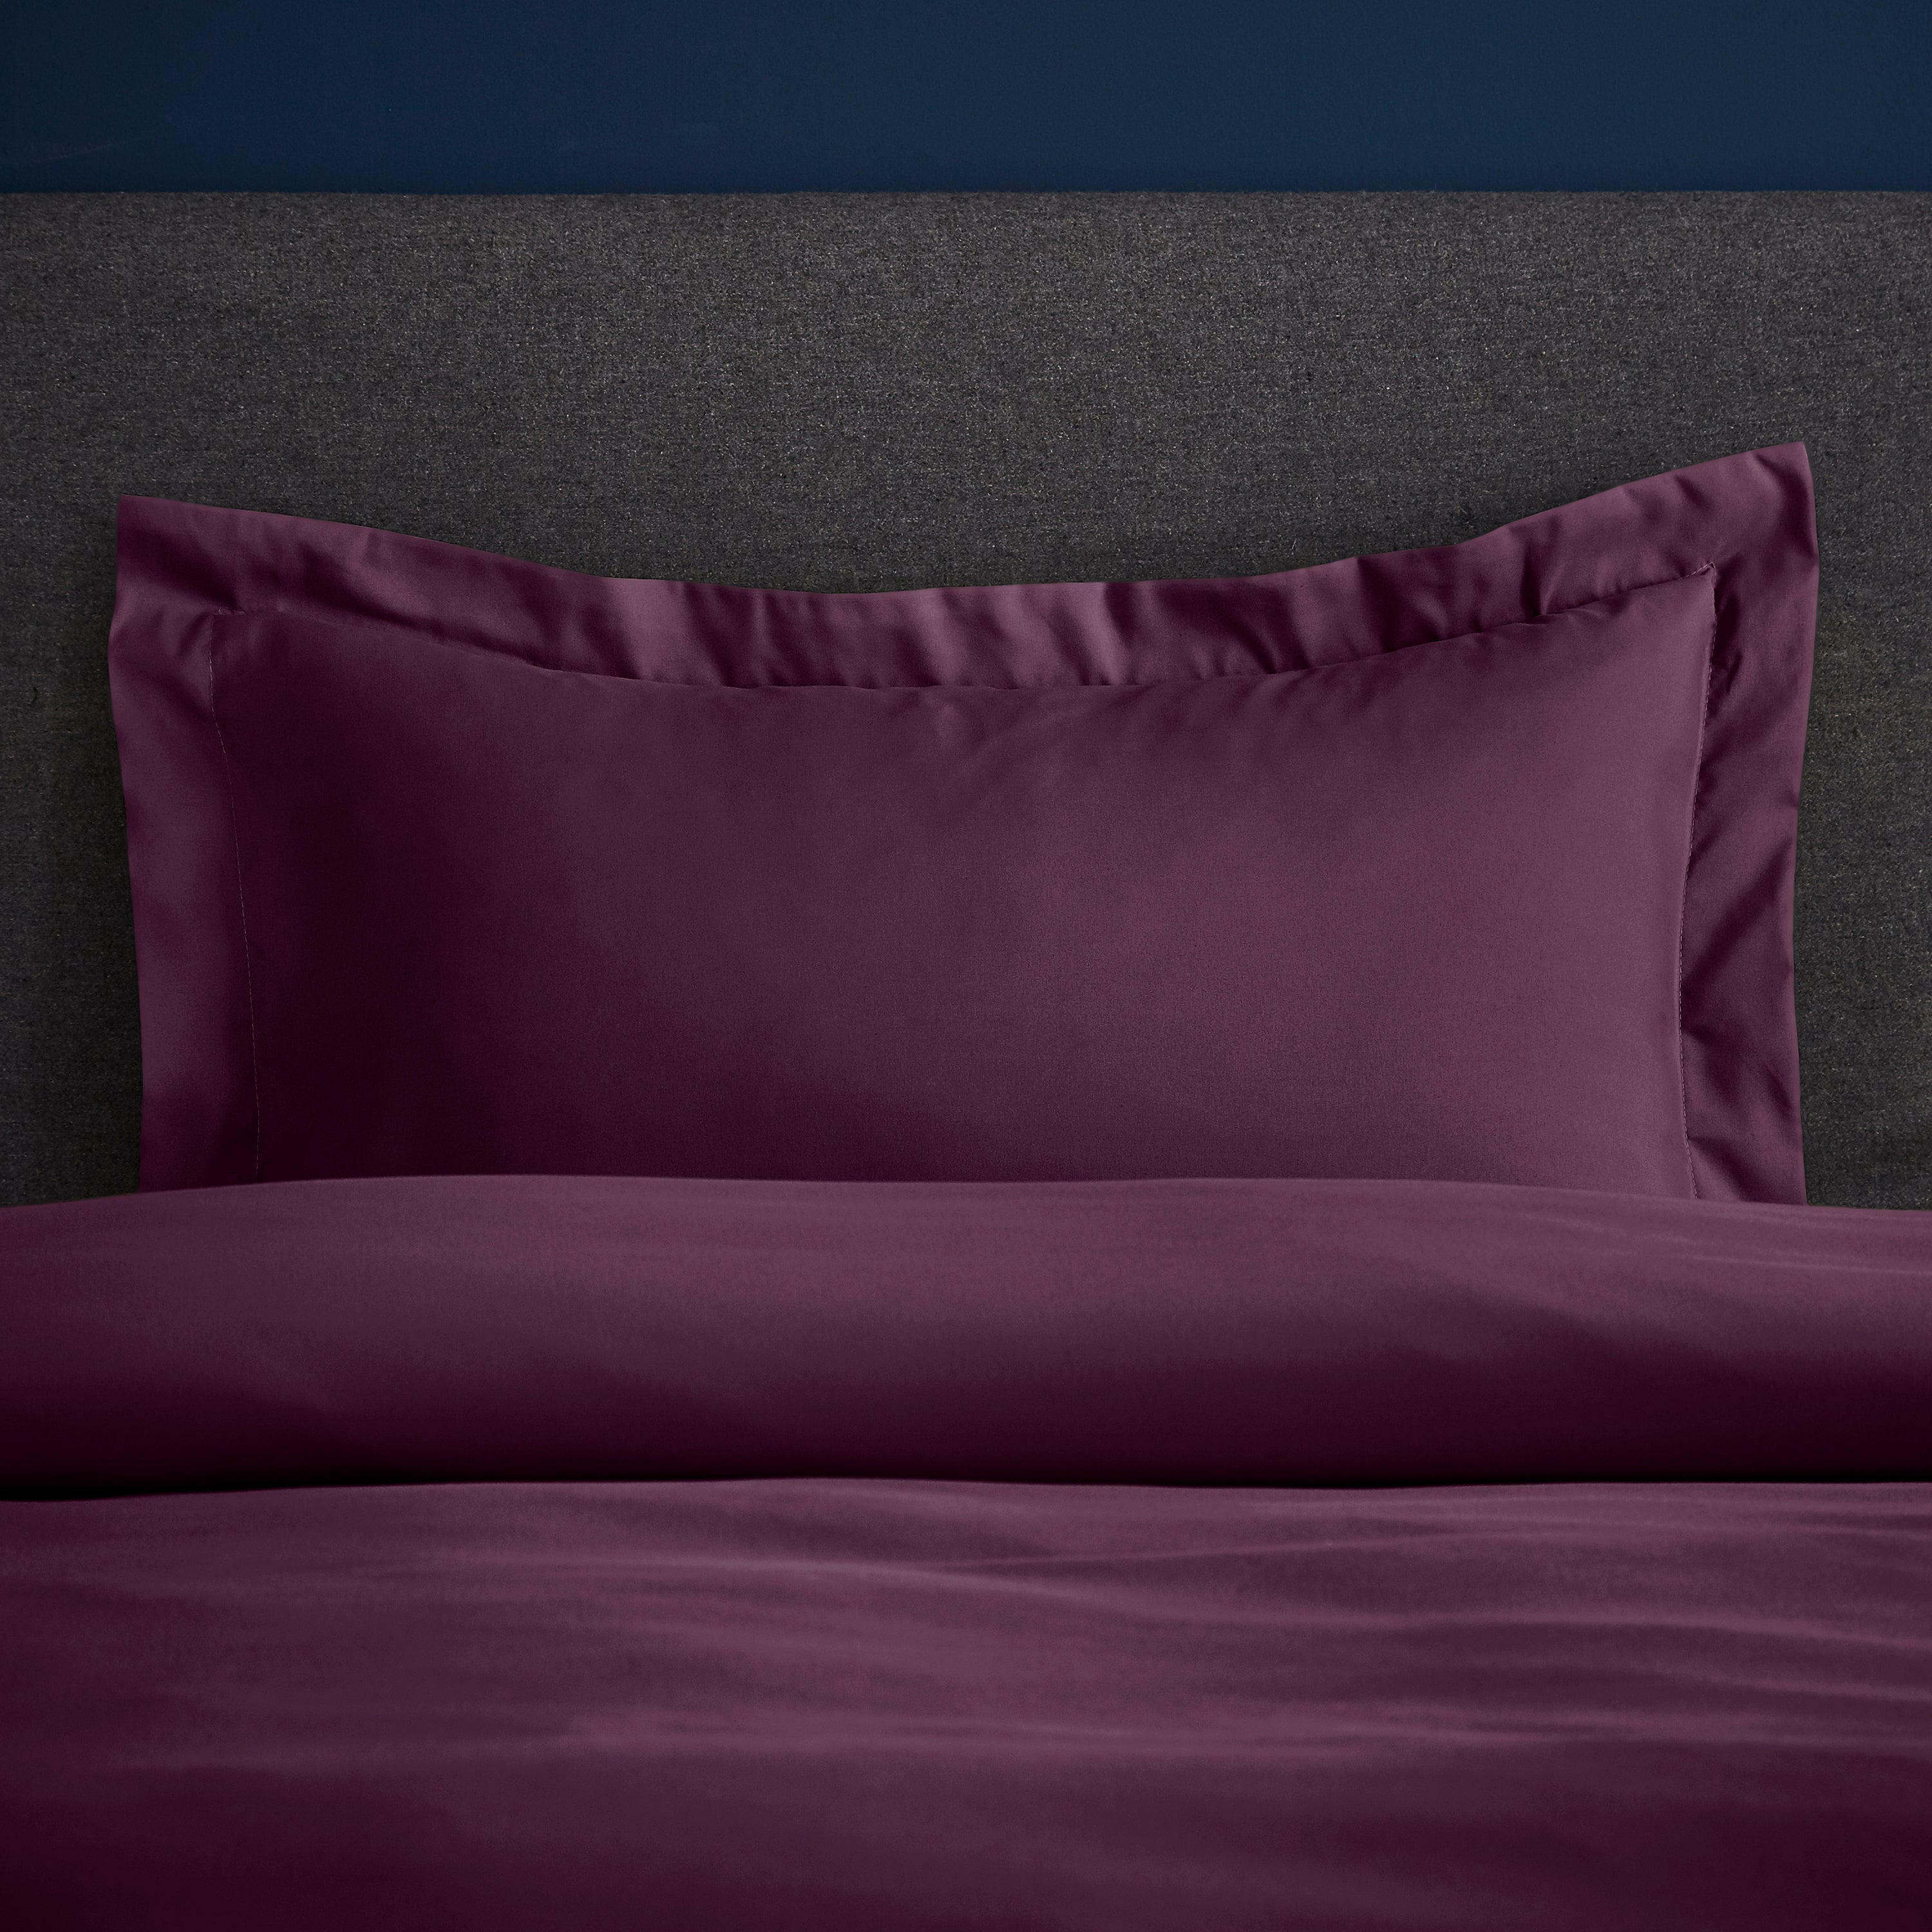 Image of Fogarty Soft Touch Plum Oxford Pillowcase Plum Purple